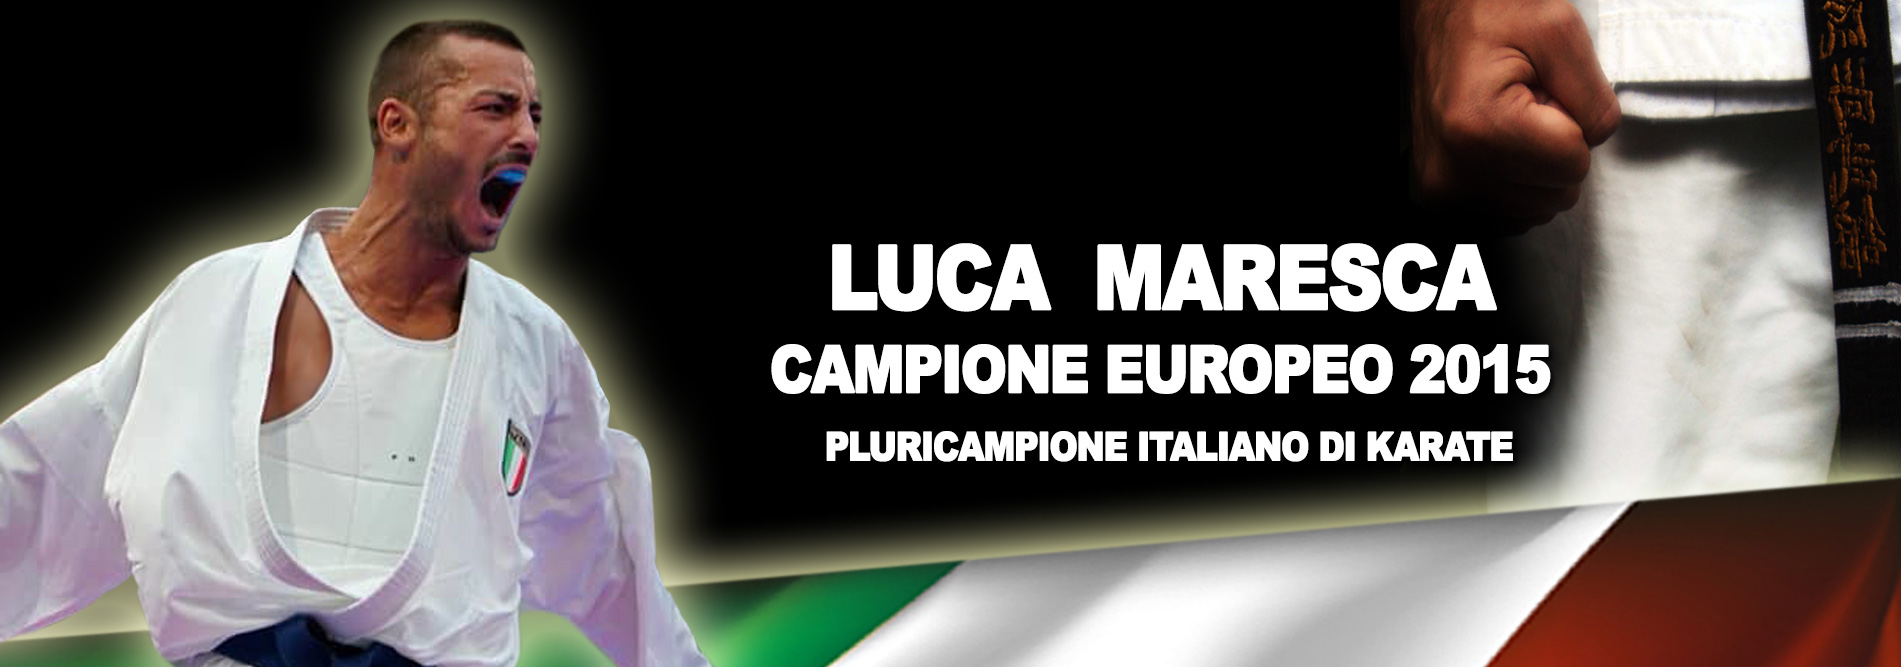 Luca Maresca